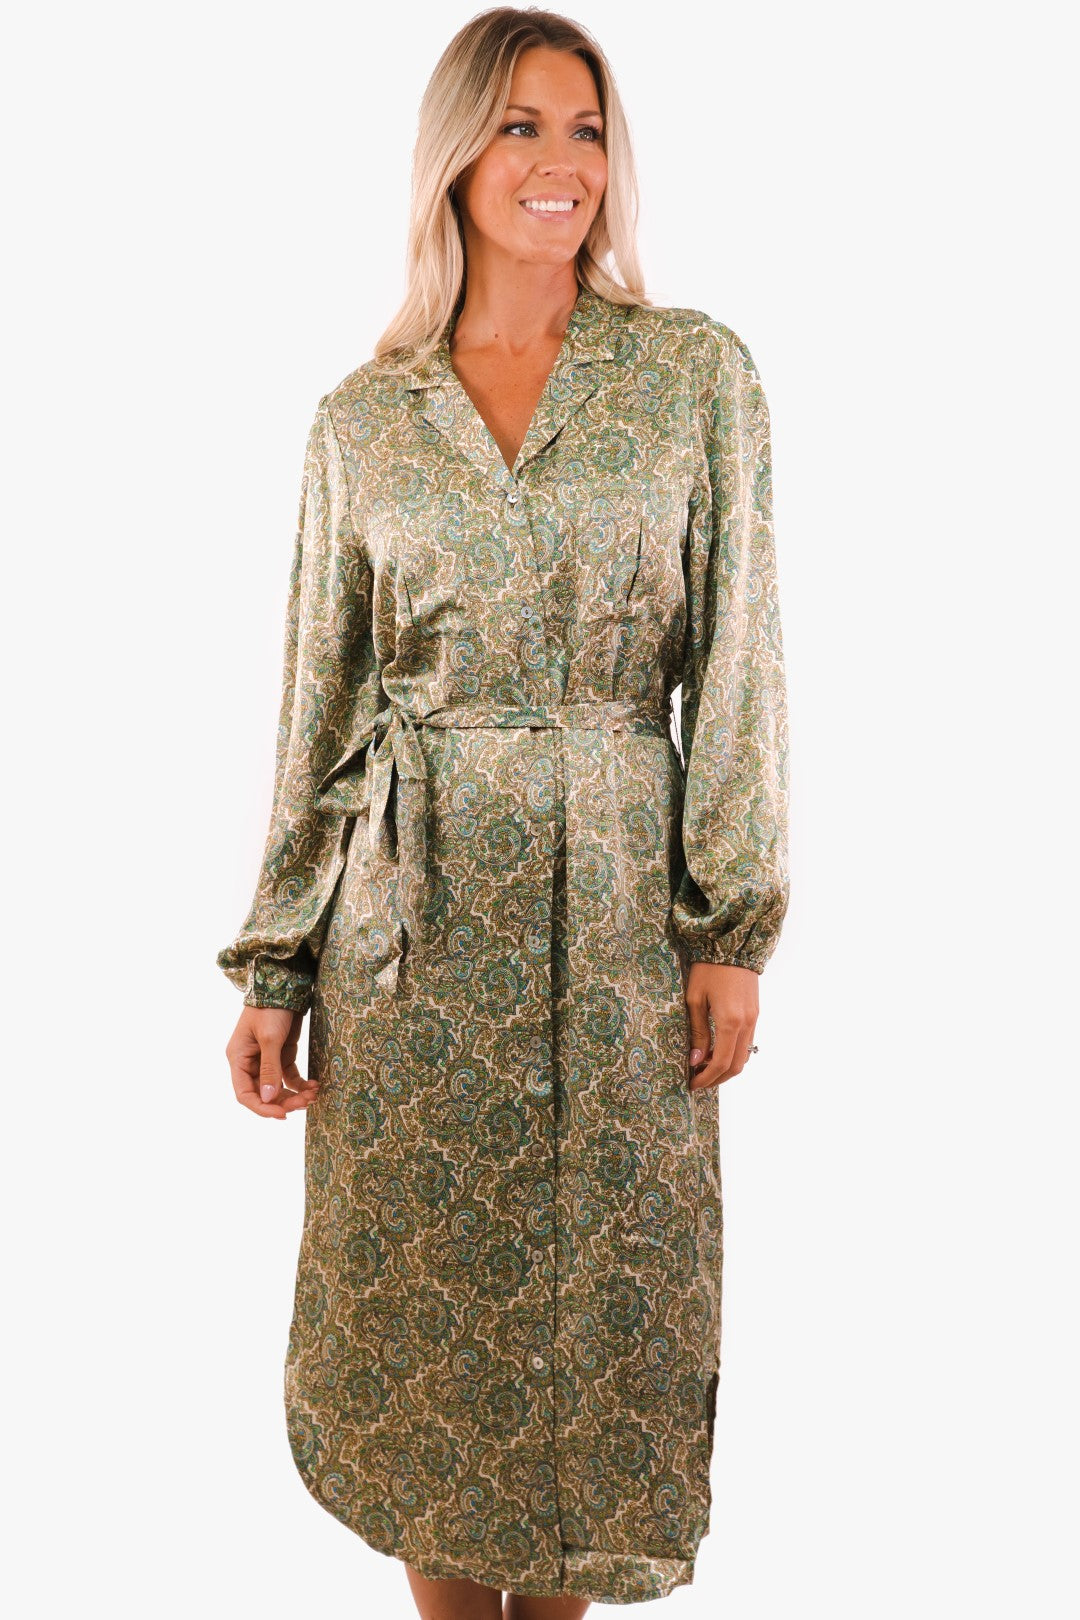 Esqualo dress in Olive color